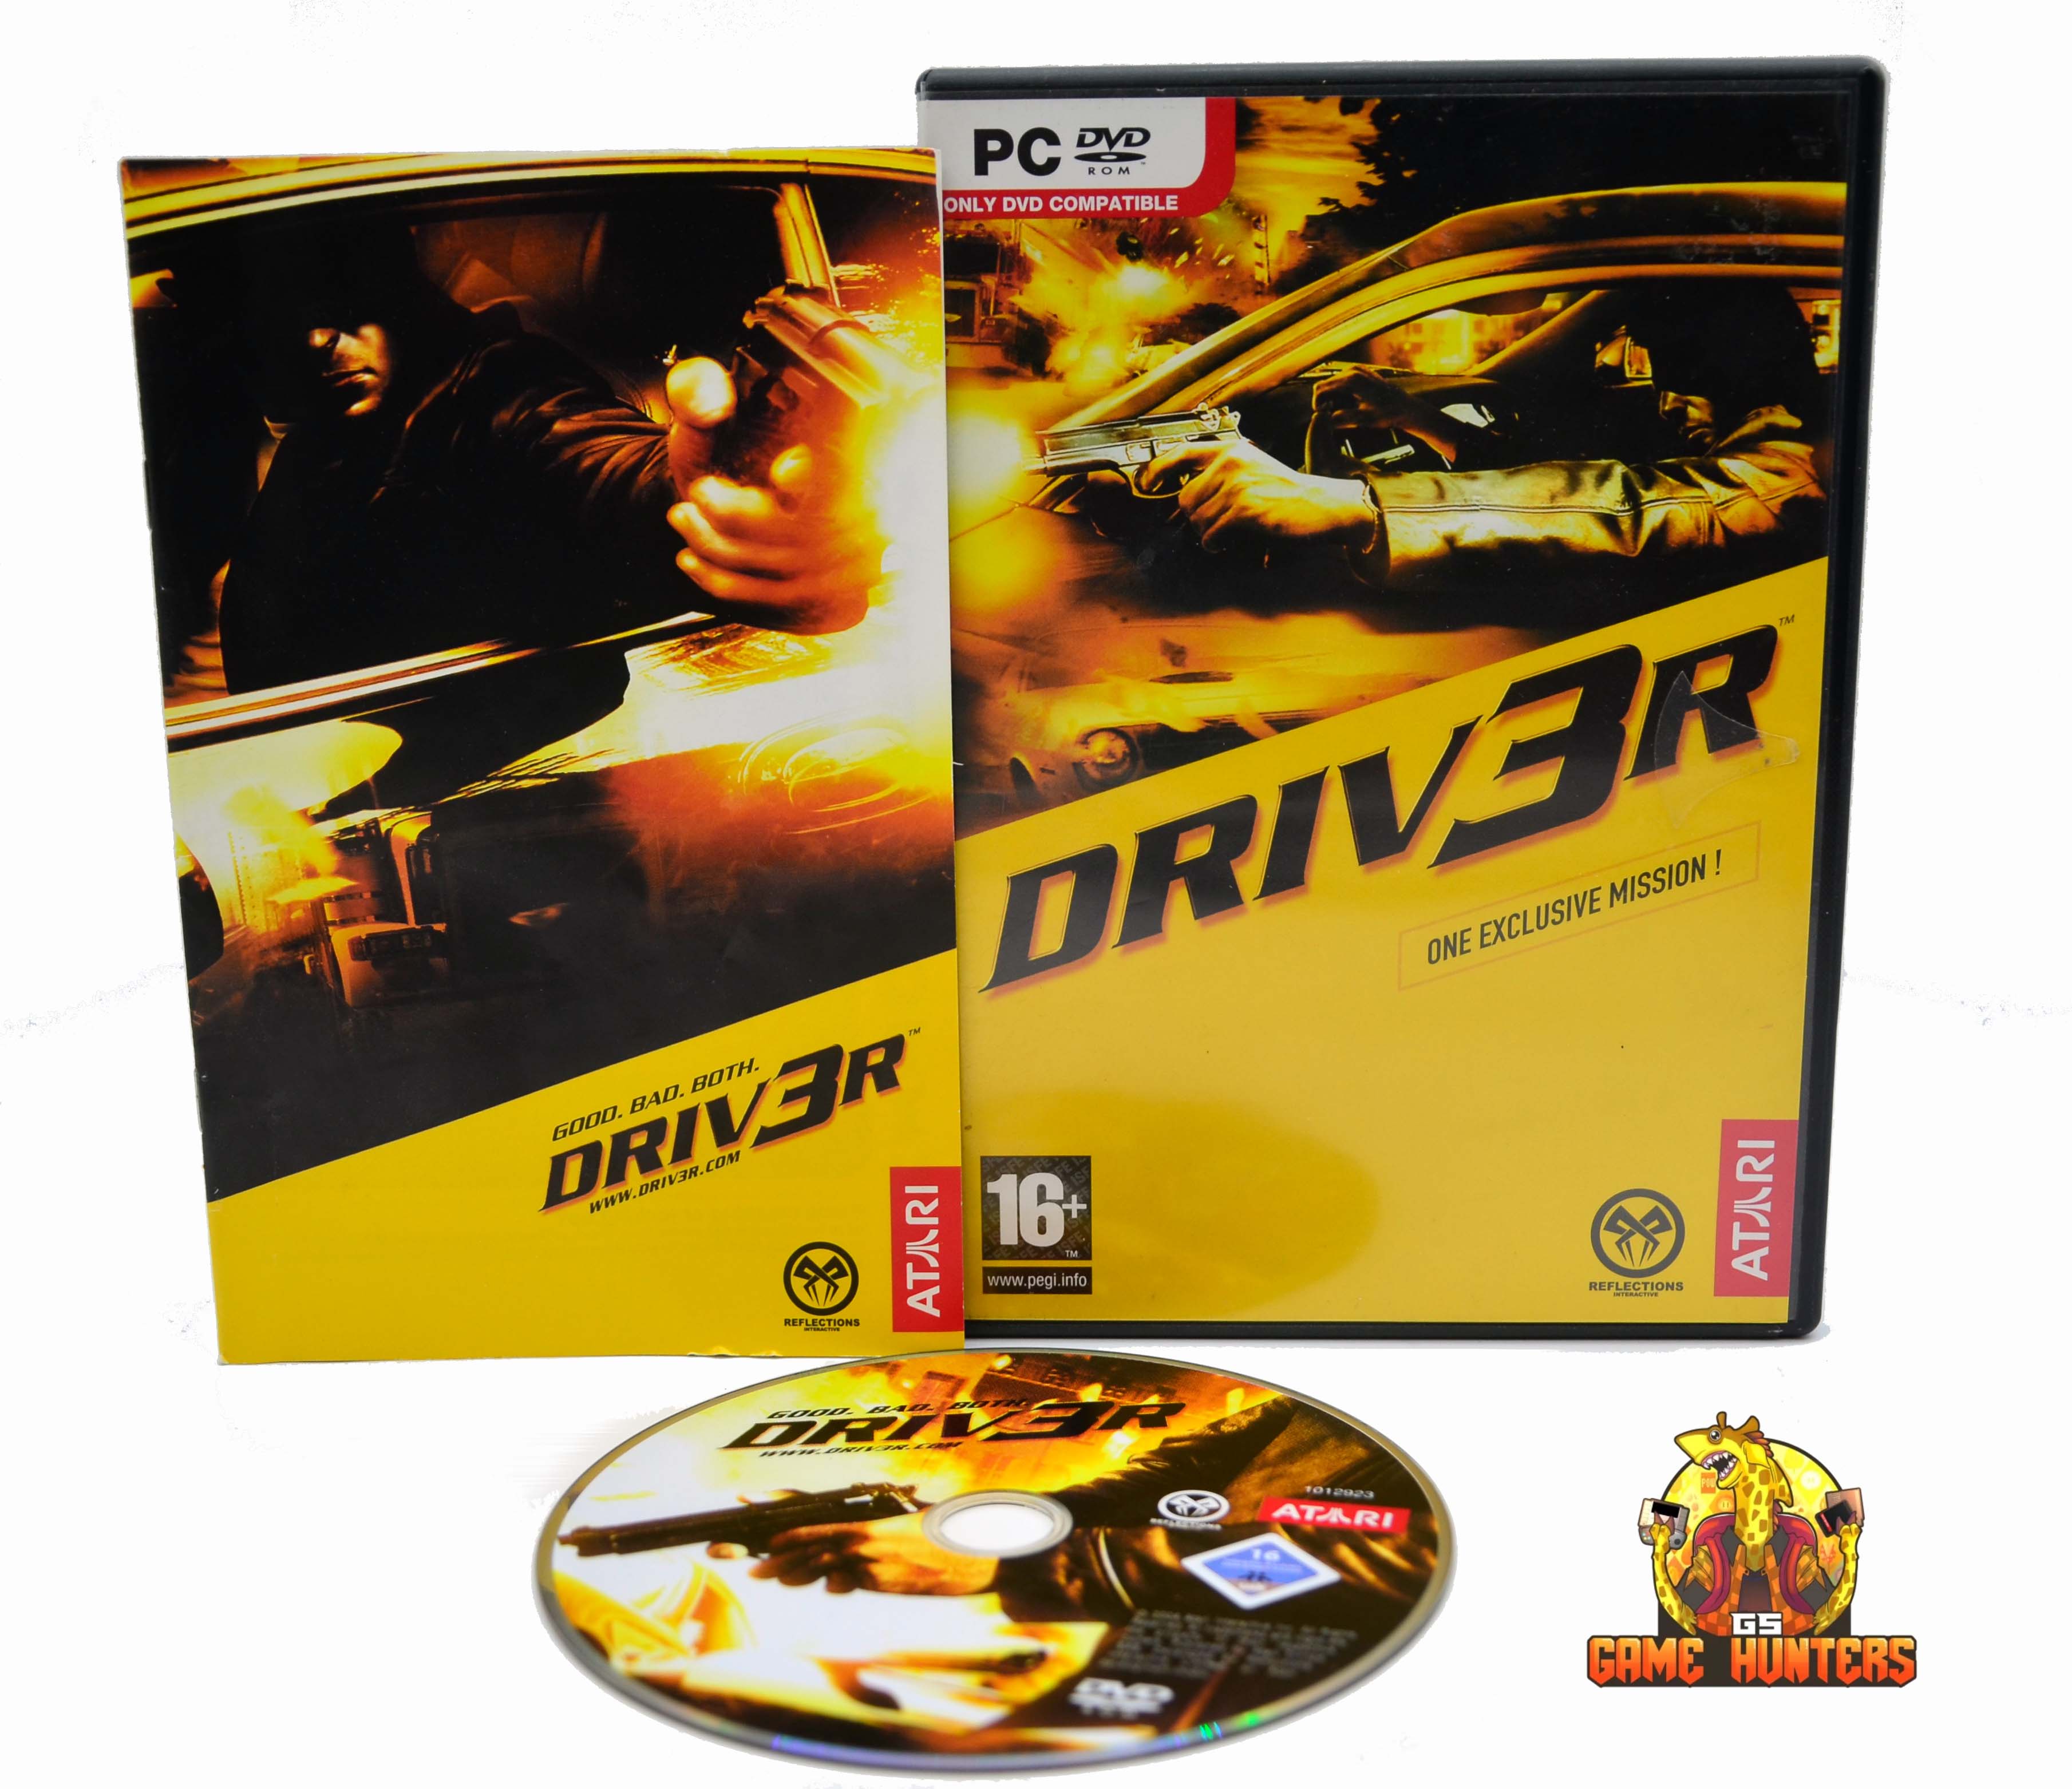 Driv3r Case, Manual & Disc.jpg  by GSGAMEHUNTERS